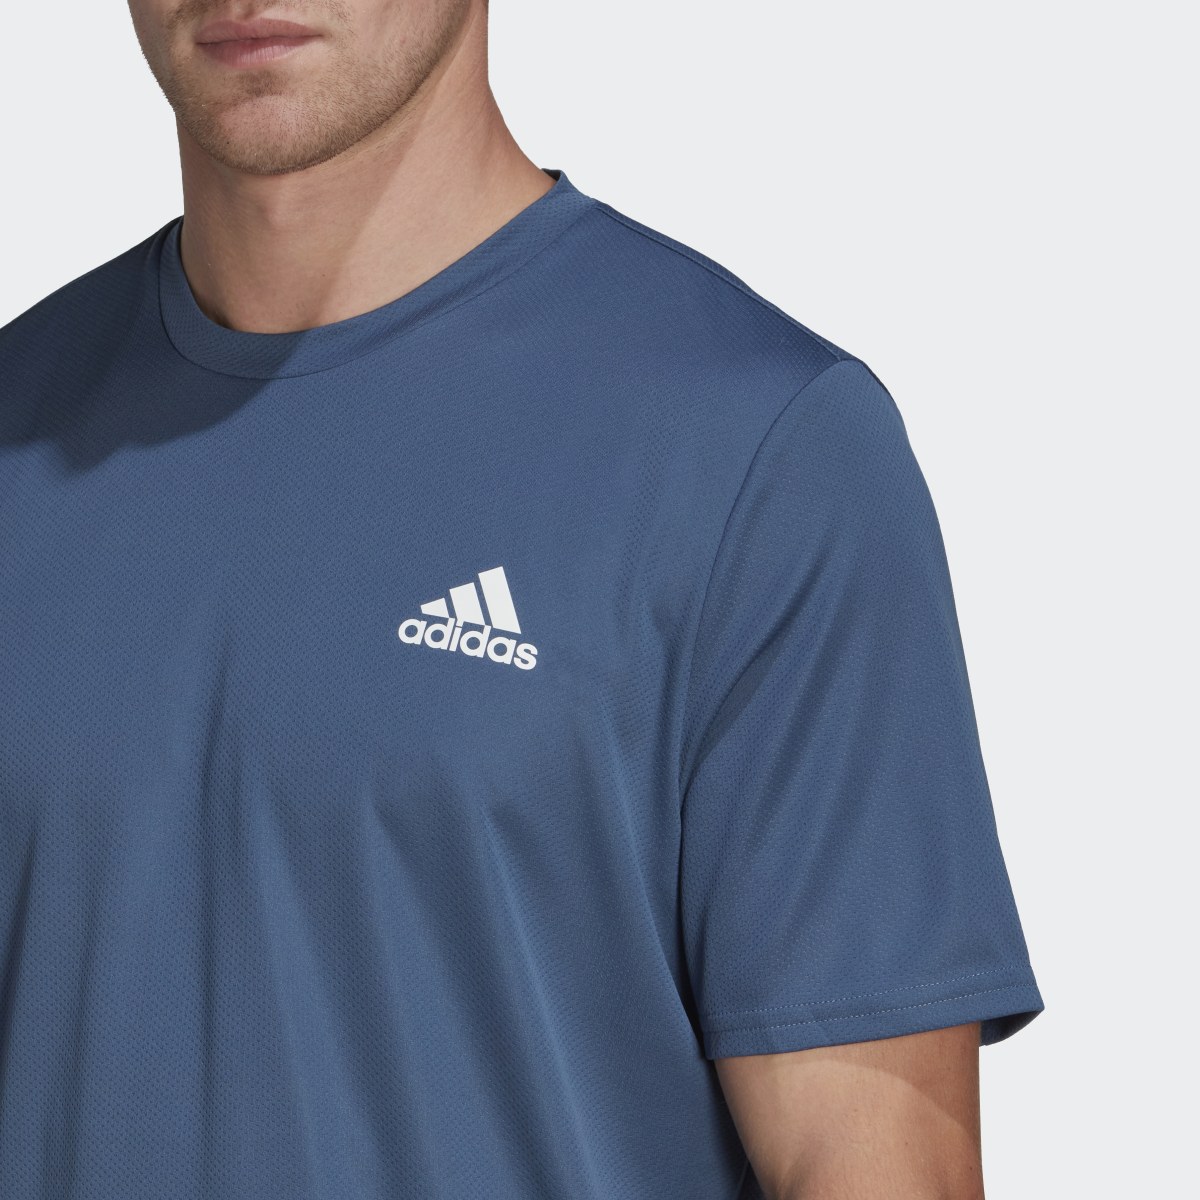 Adidas AEROREADY Designed for Movement T-Shirt. 6